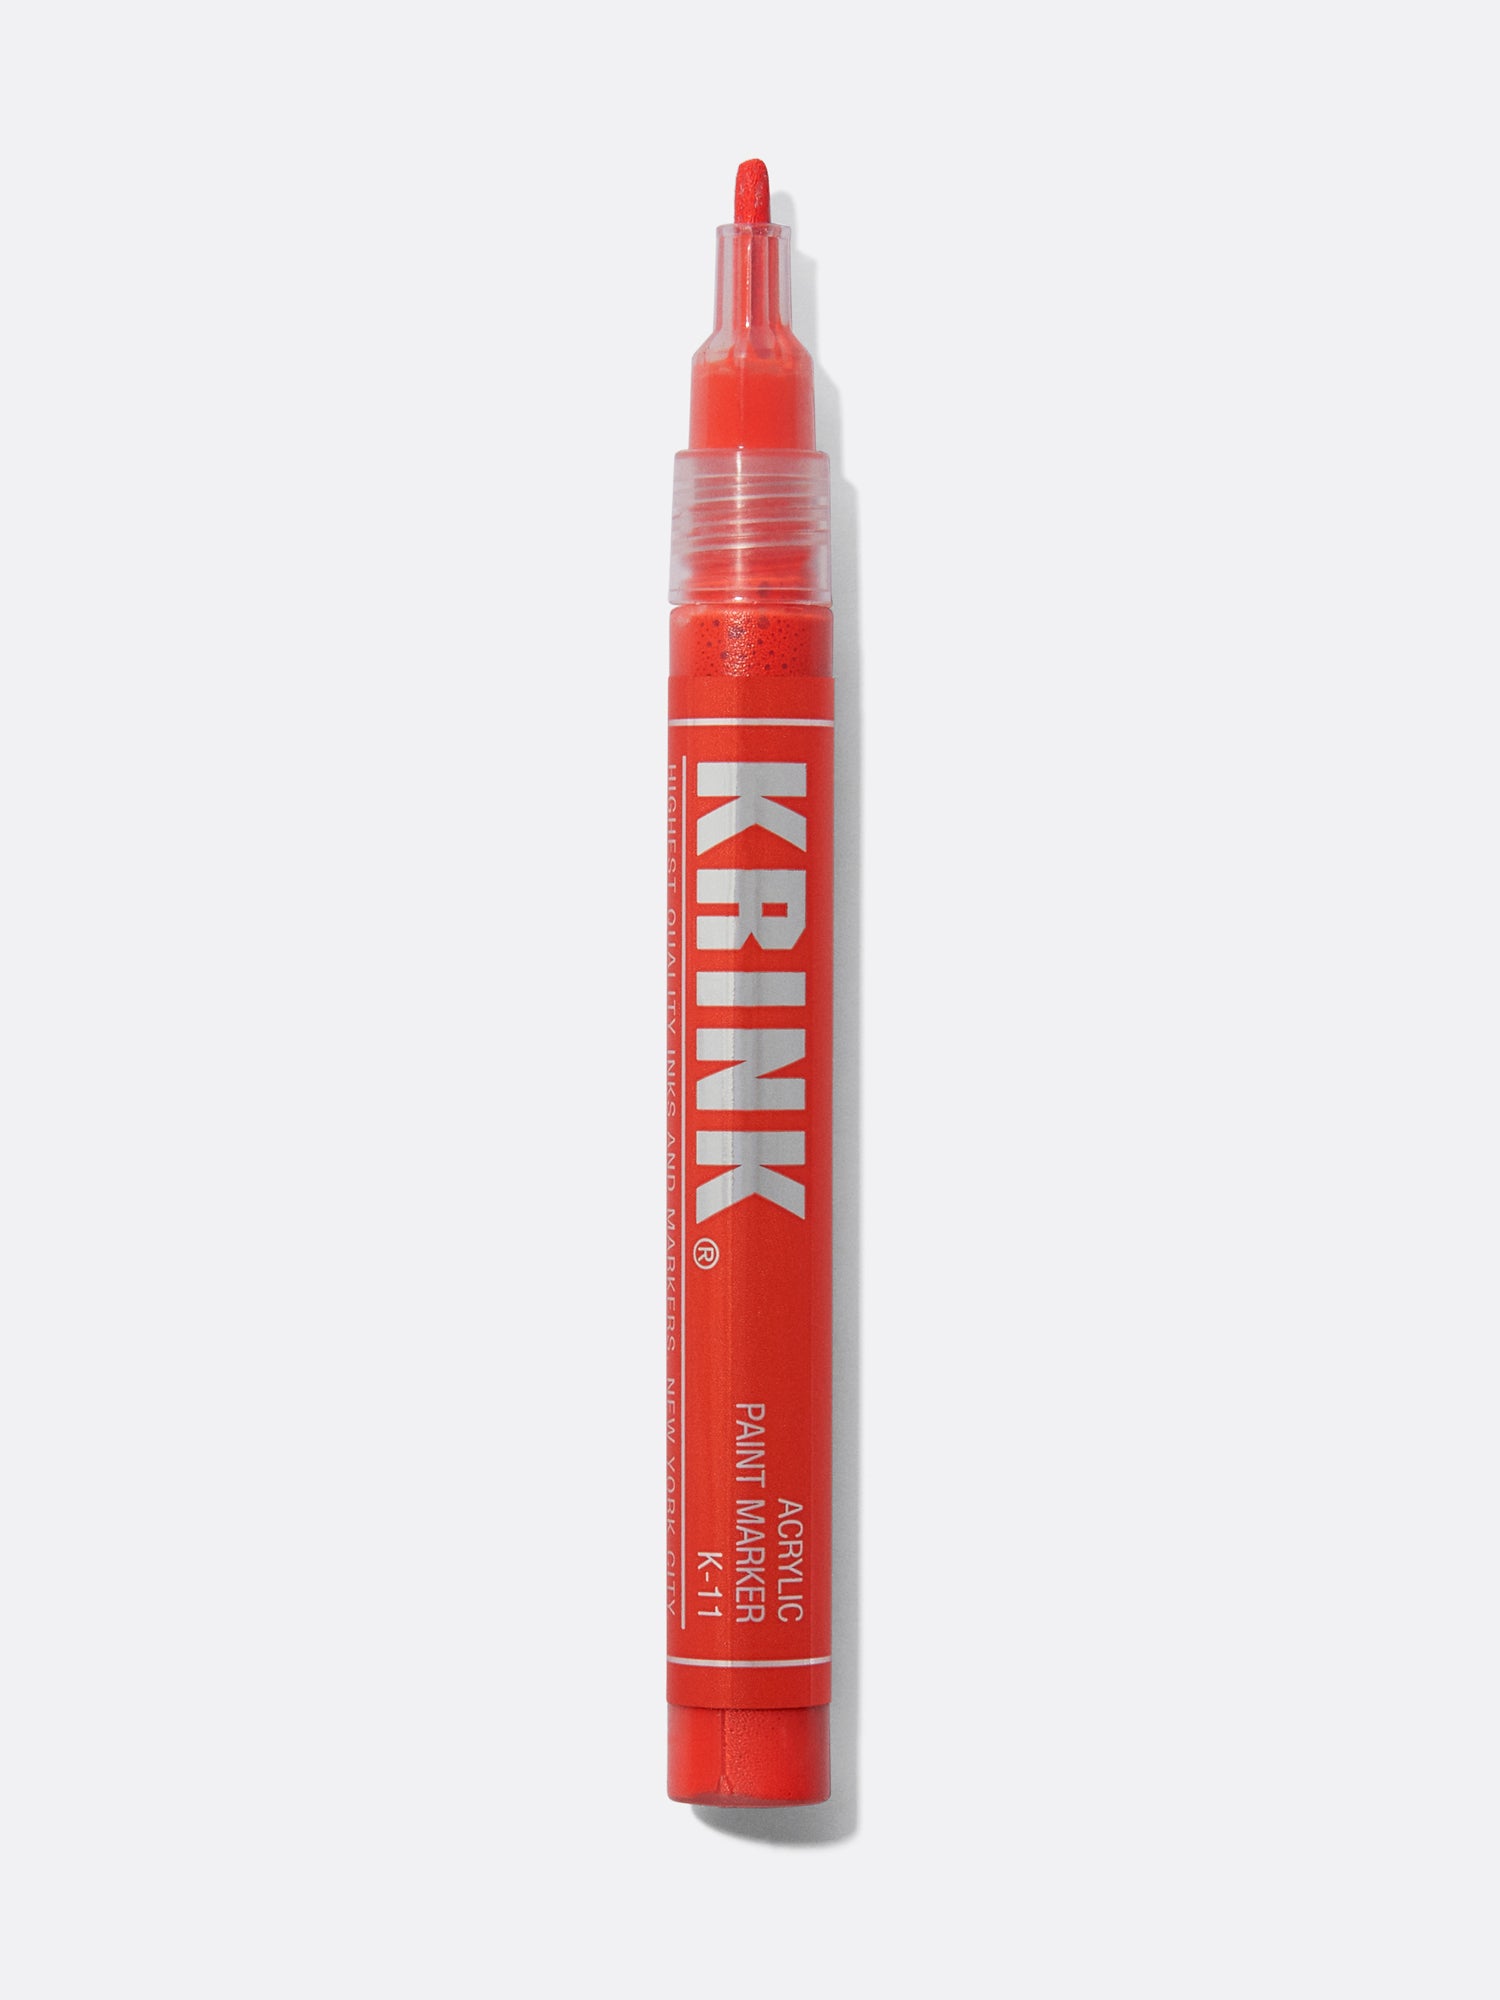 Krink - K-42 Opaque Permanent Paint Marker - Orange